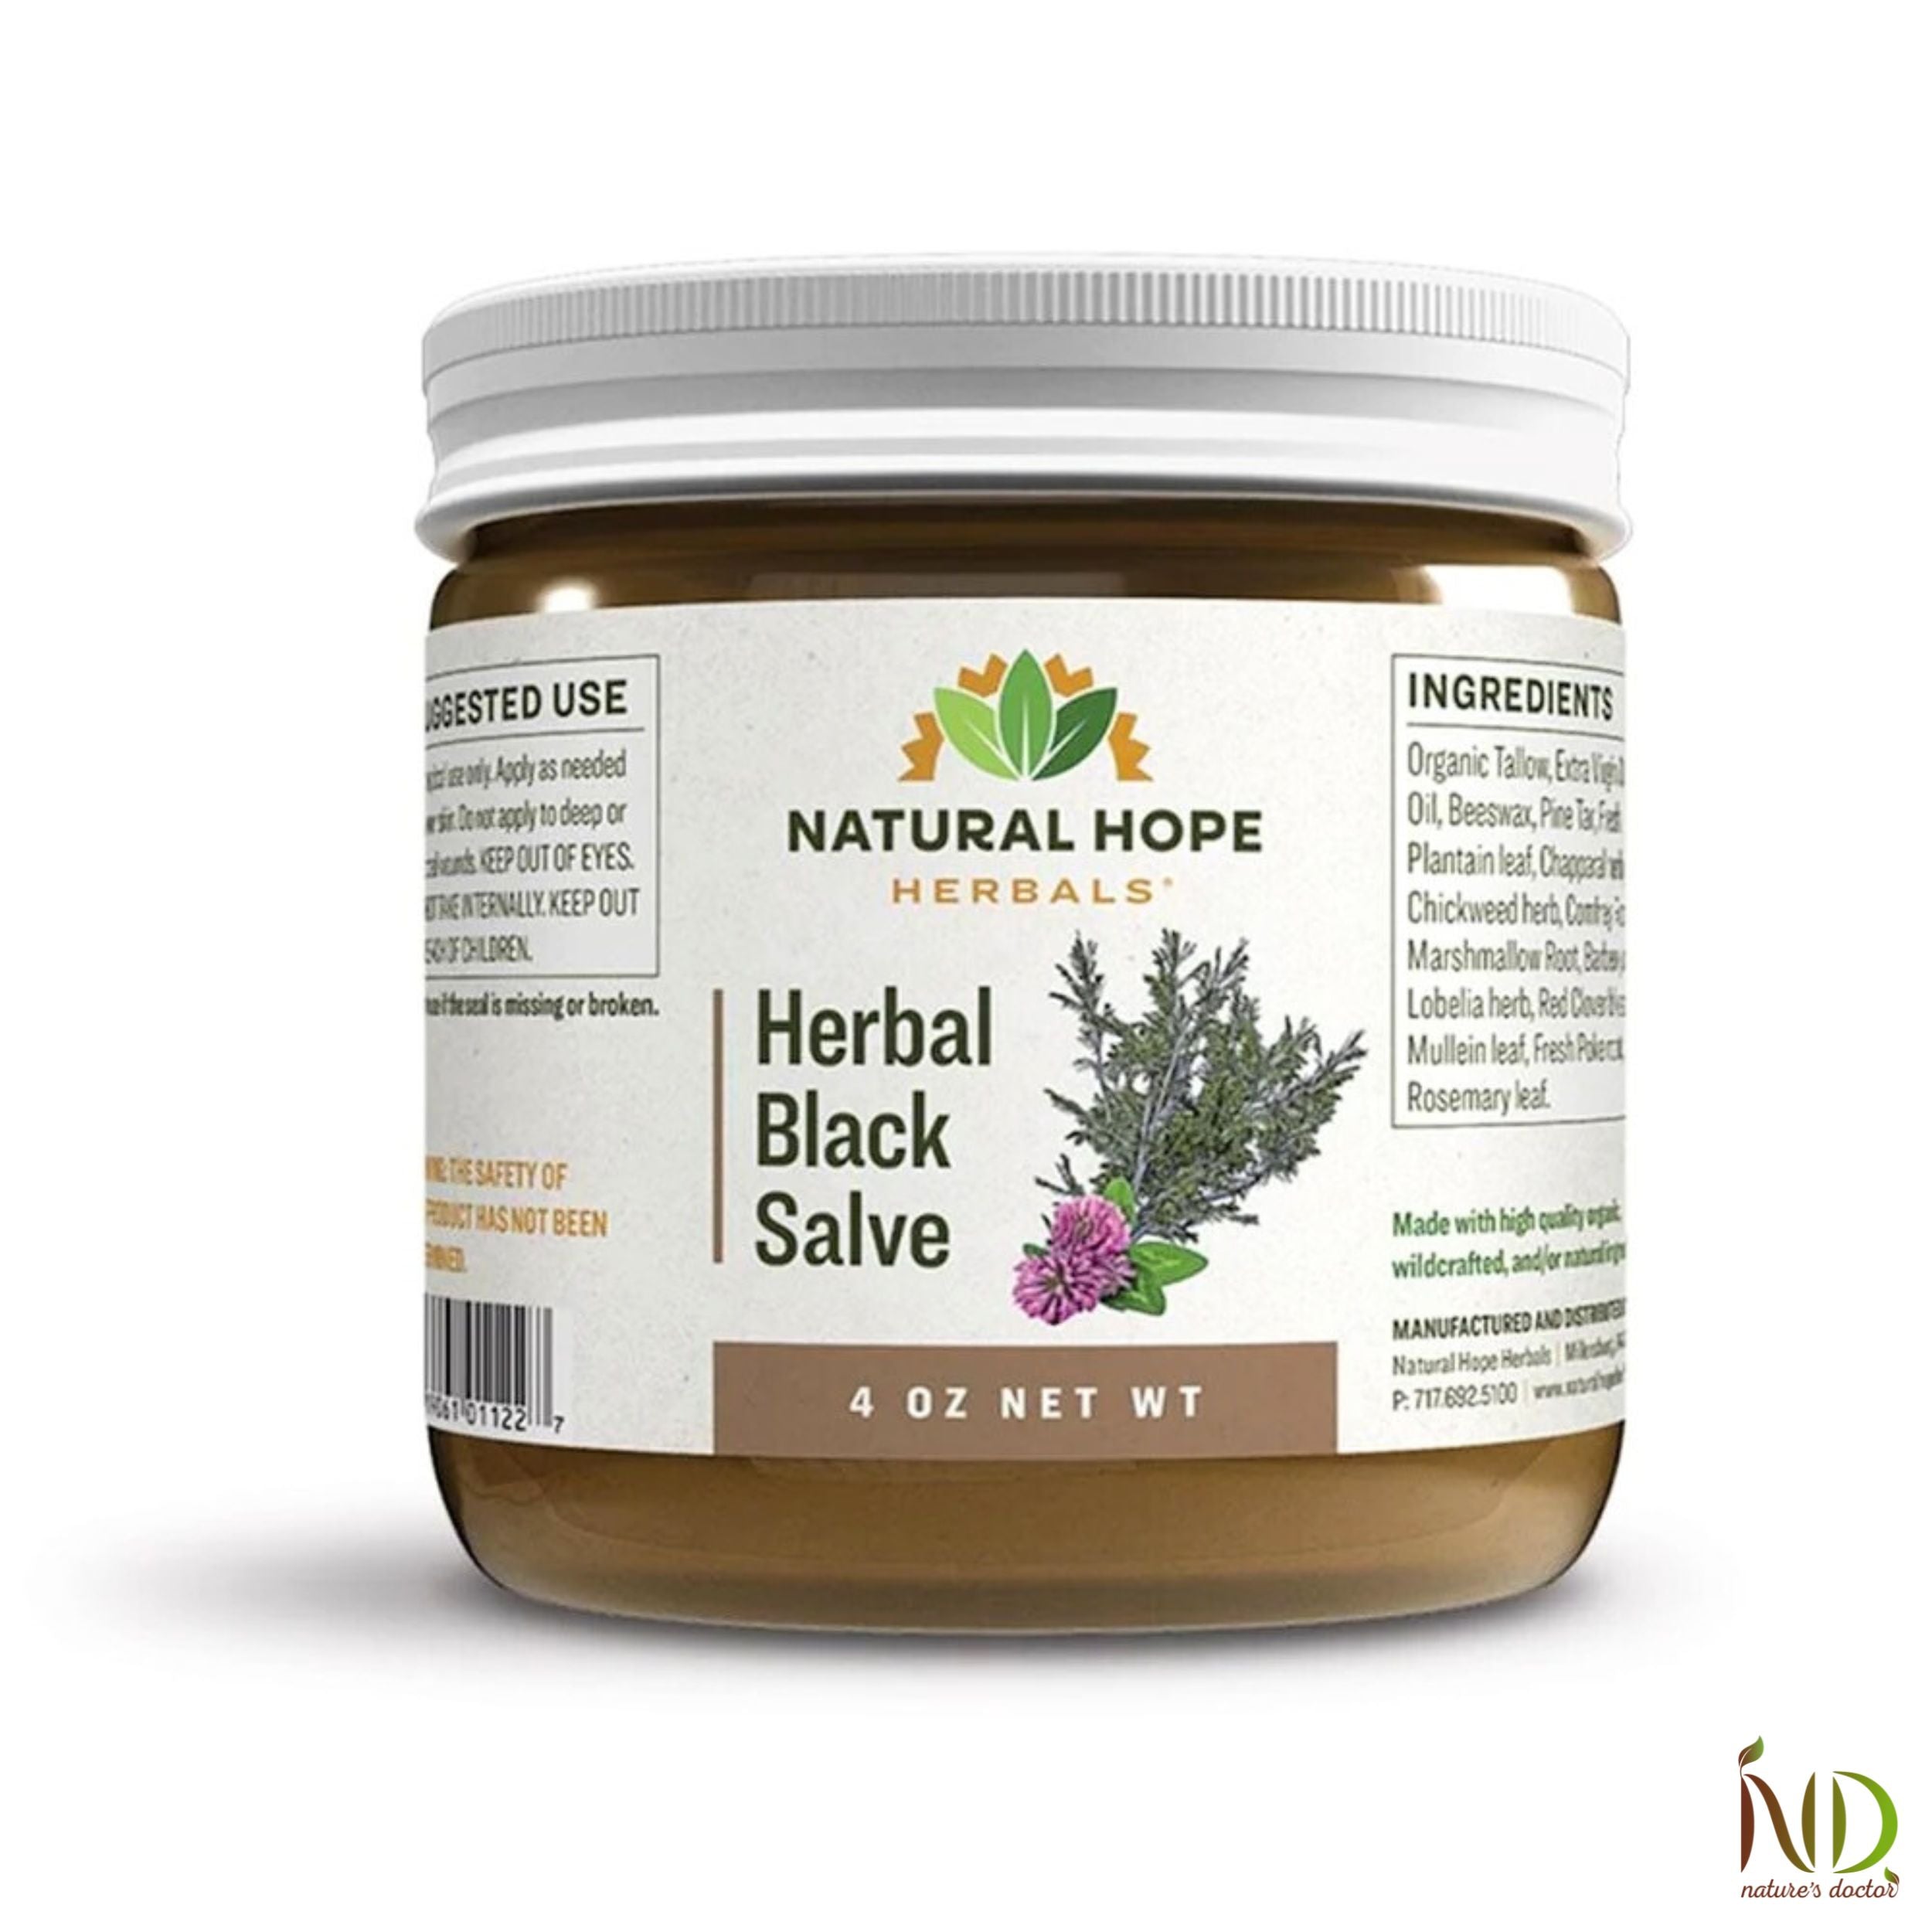 Herbal Black Salve - Natural Hope Herbals